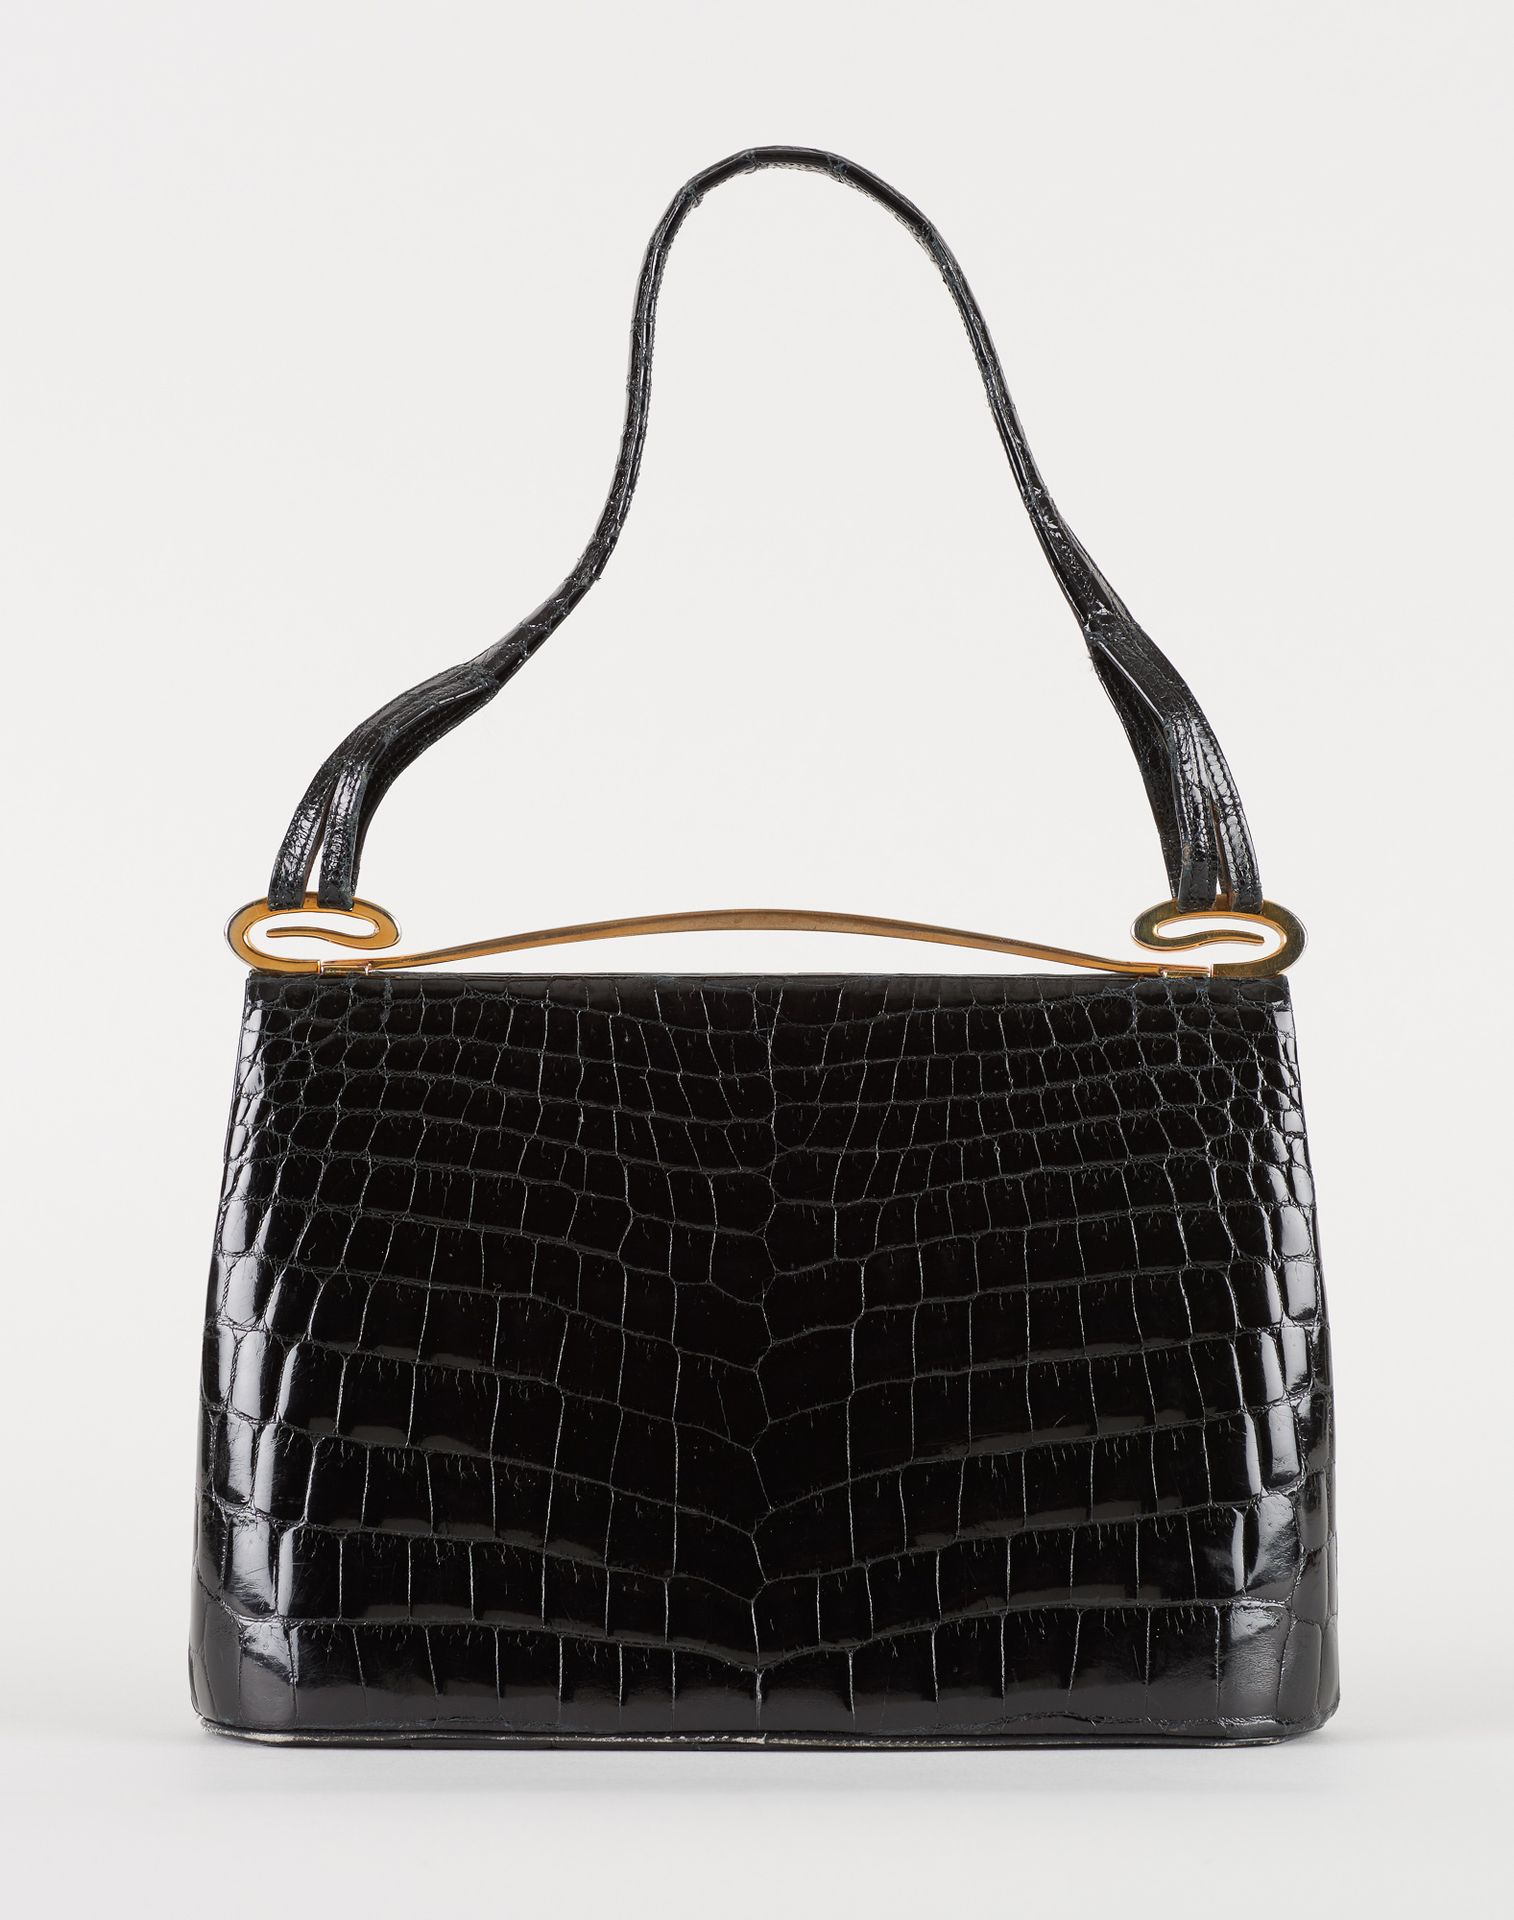 Delvaux. Leather goods: Handbag in black crocodile skin, gold trim, suede lining&hellip;